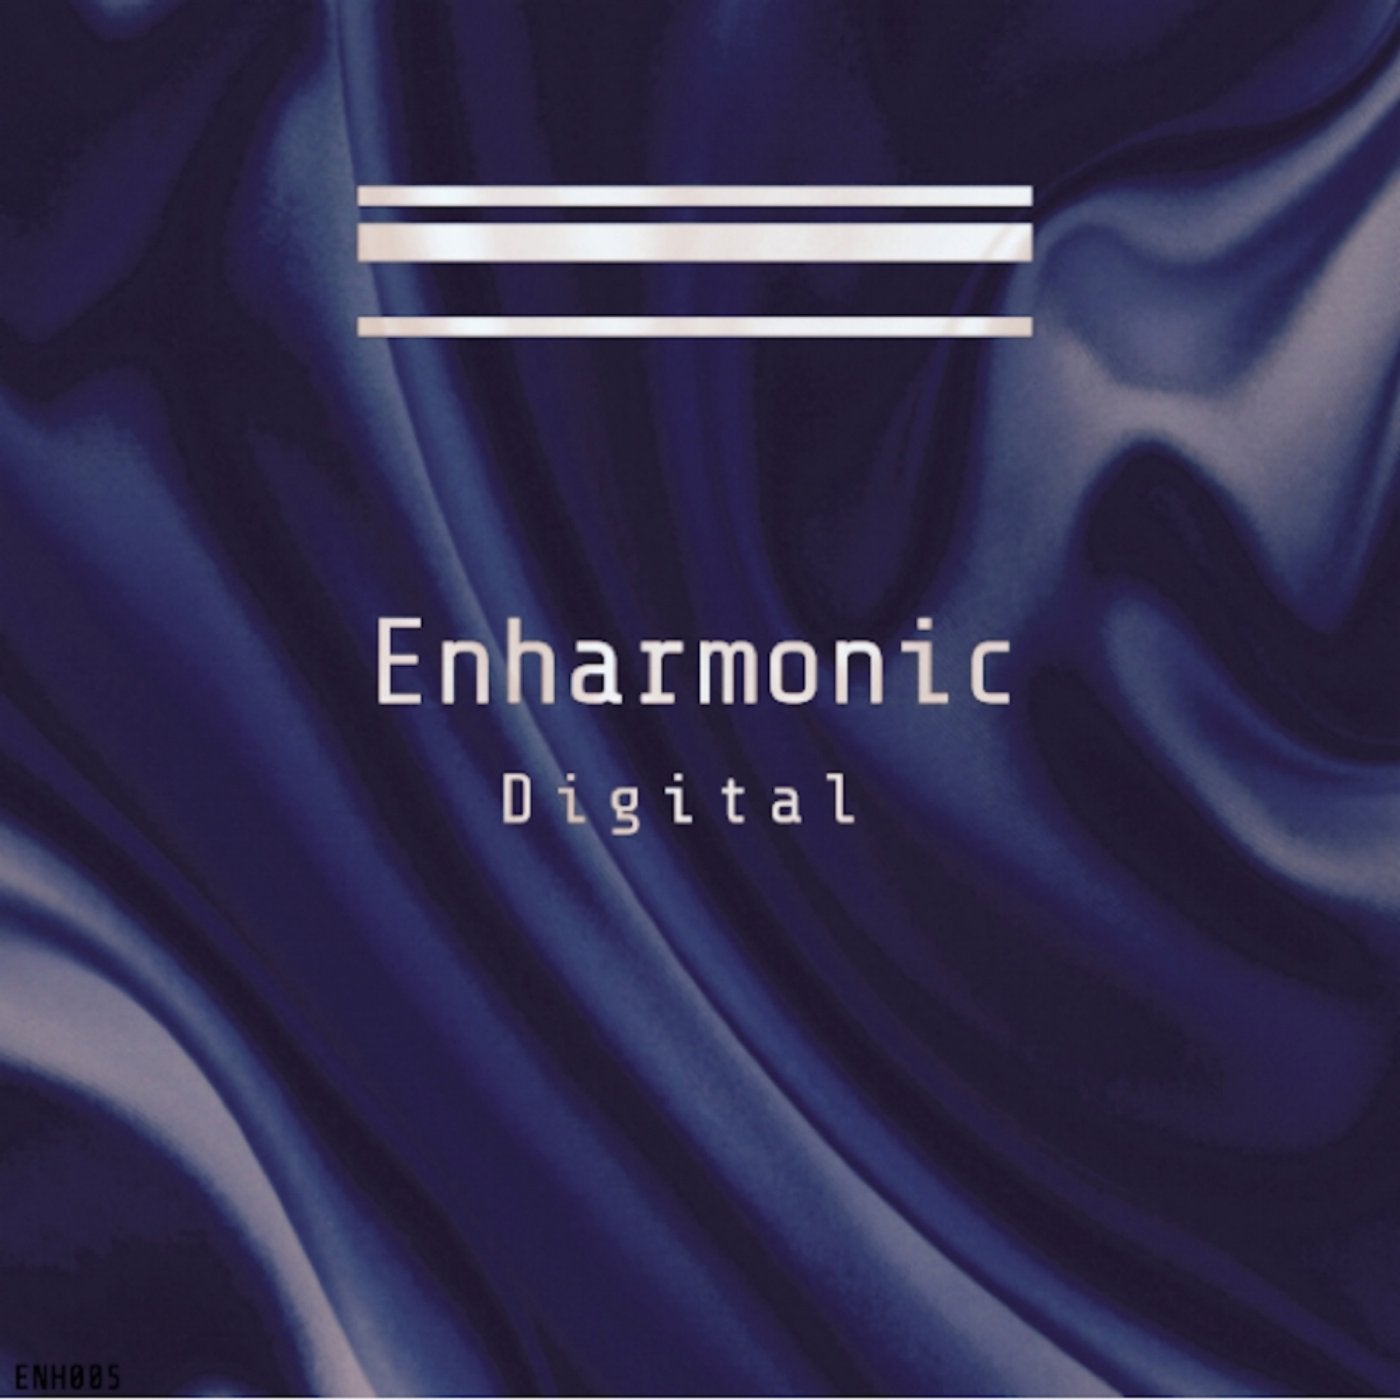 Enharmonic Digital Selection Miami 2015